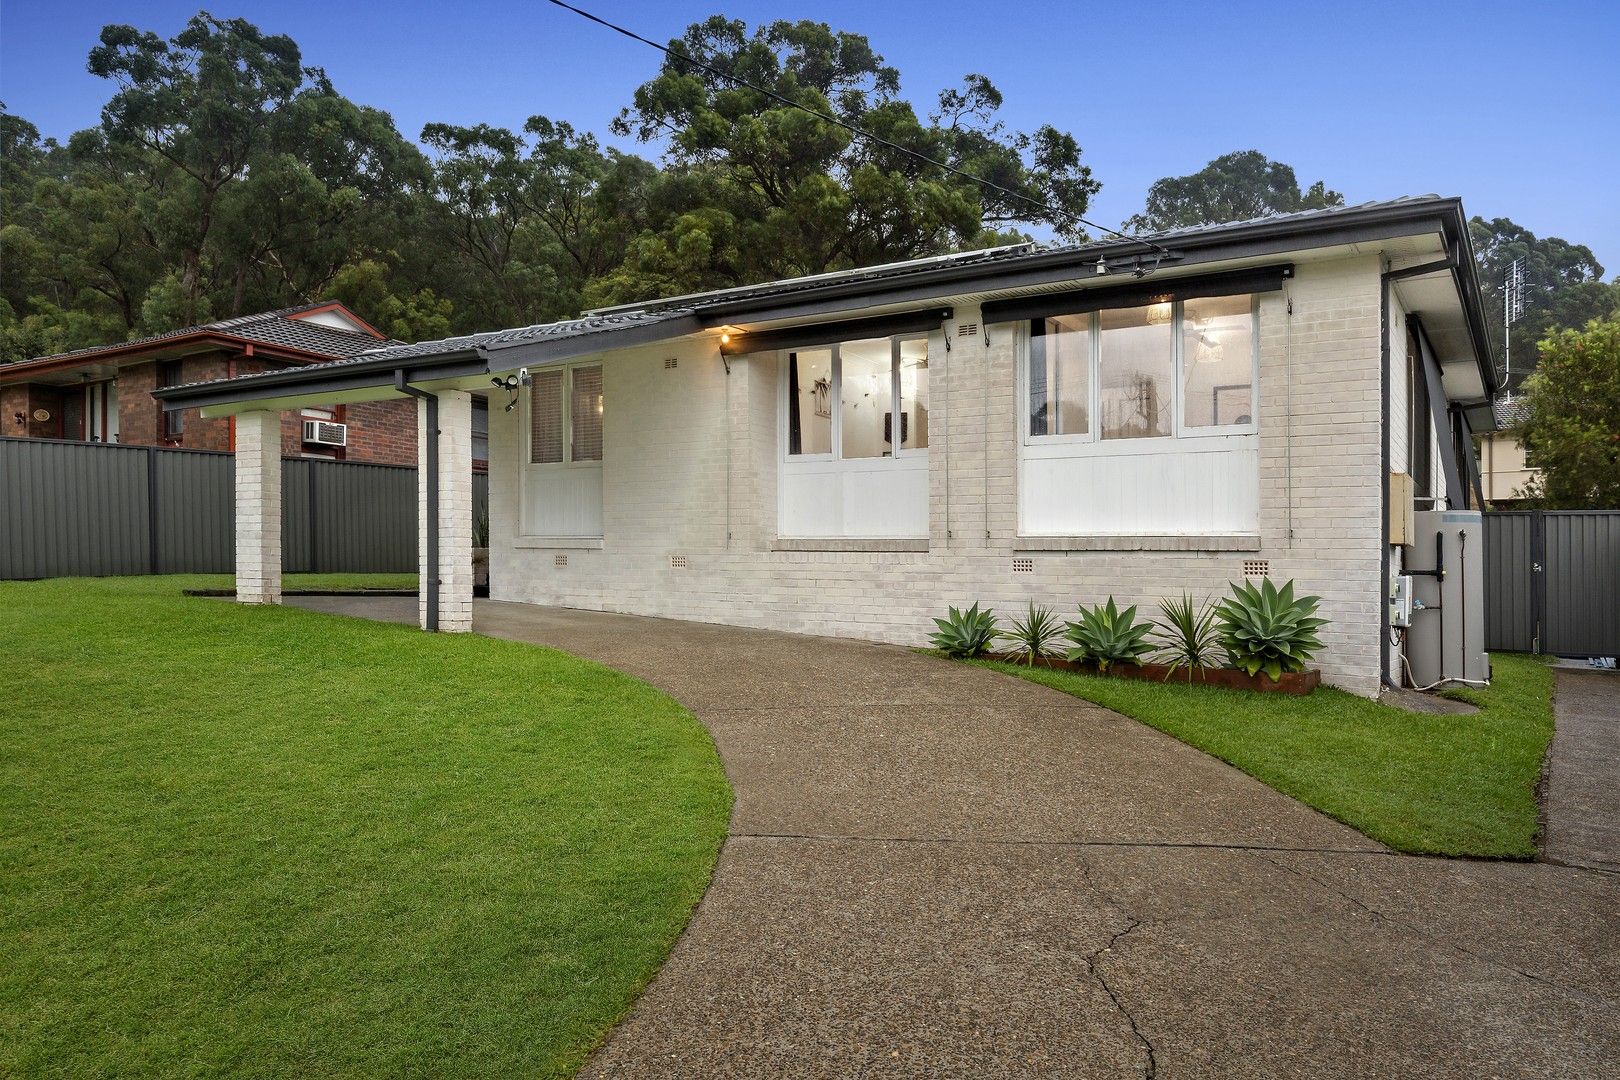 3 bedrooms House in 23 Bambara Street TORONTO NSW, 2283